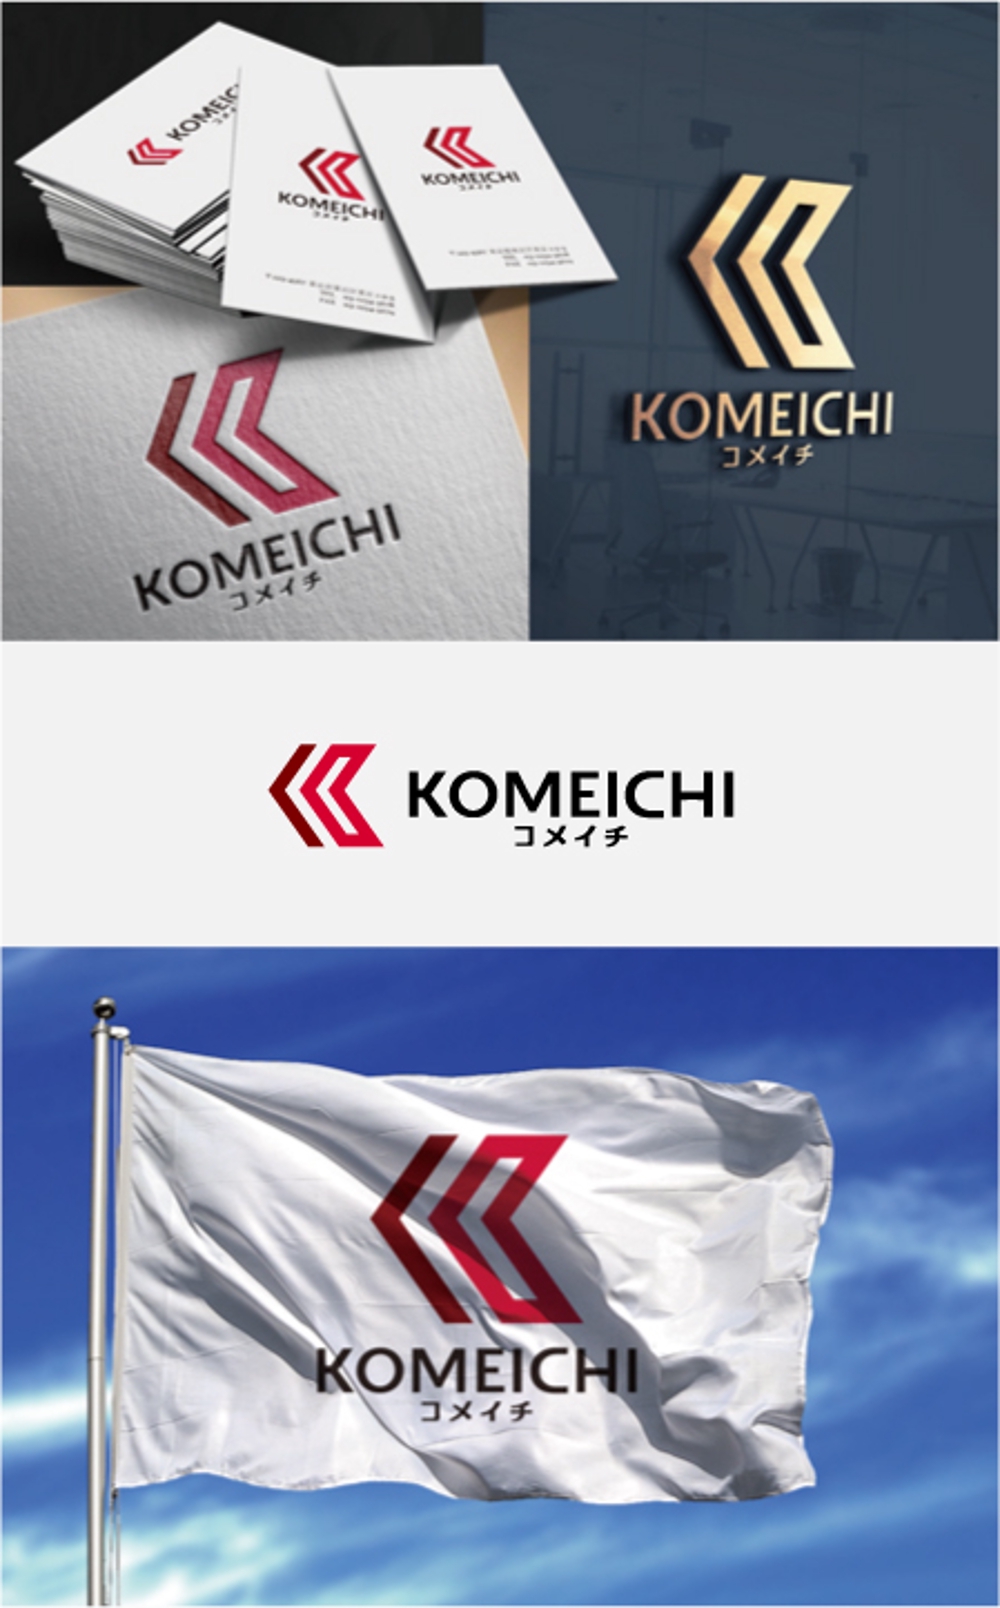 komeichi1.jpg